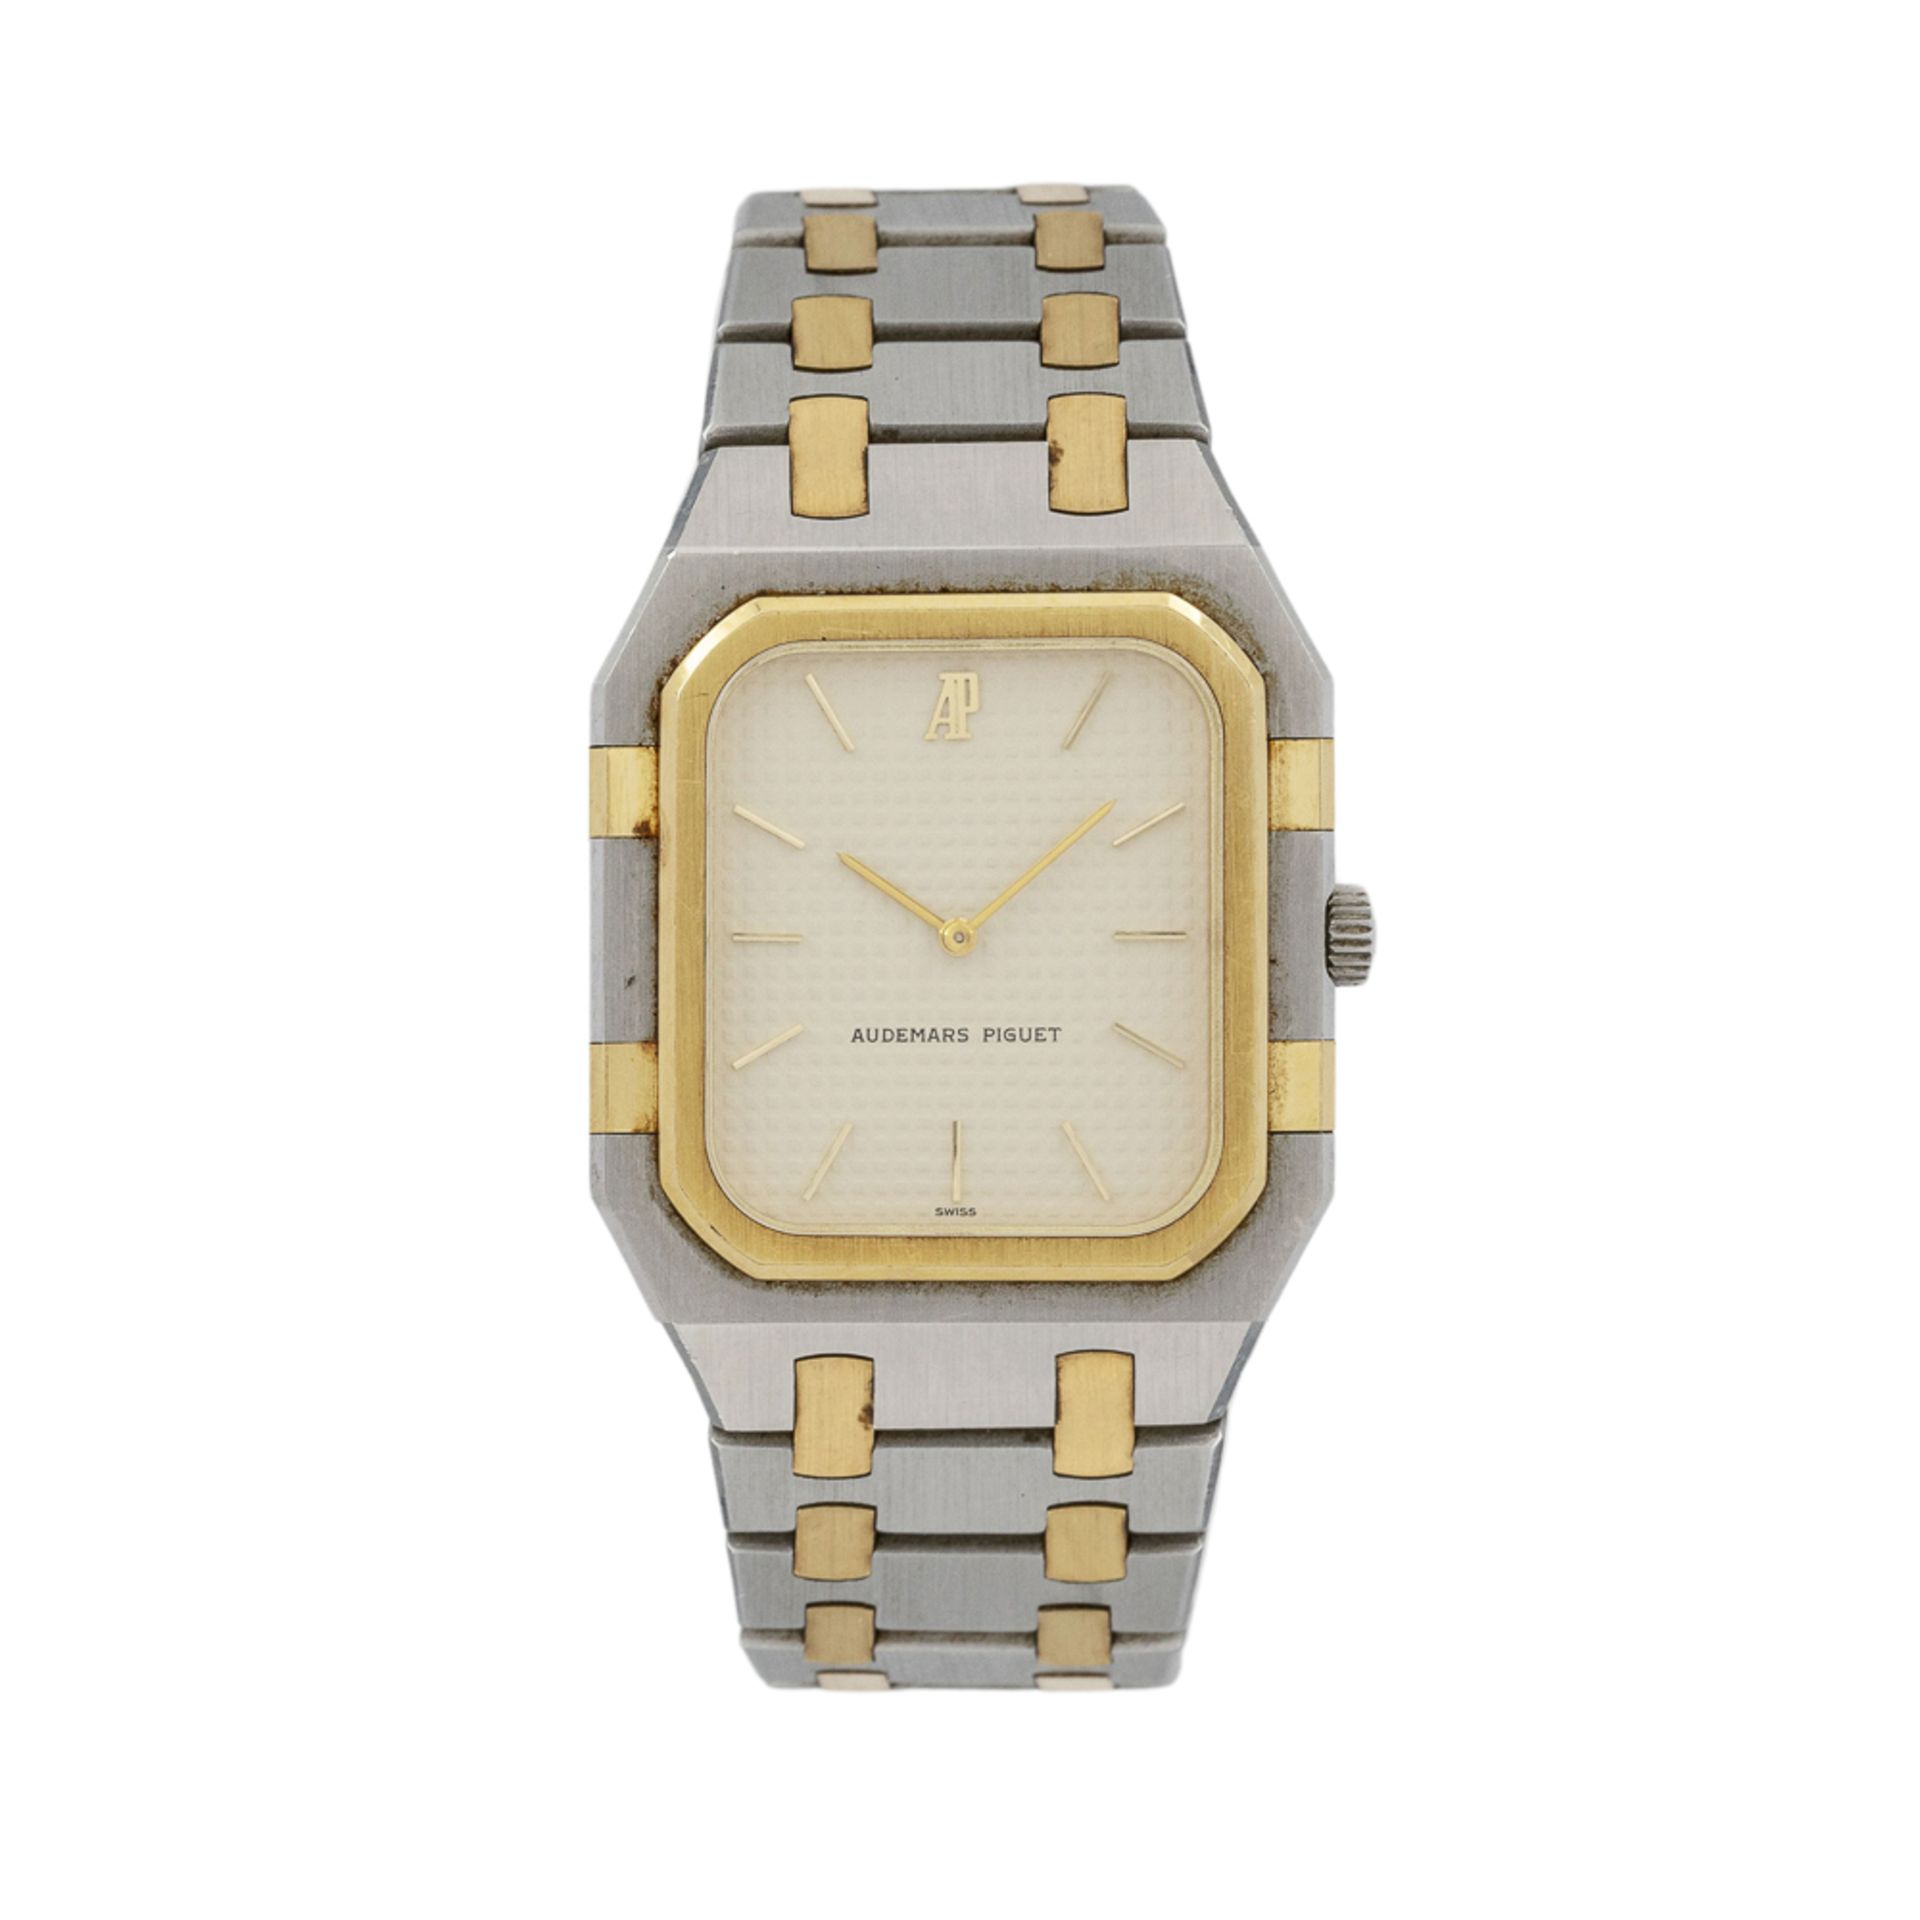 Audemars Piguet vintage wristwatch